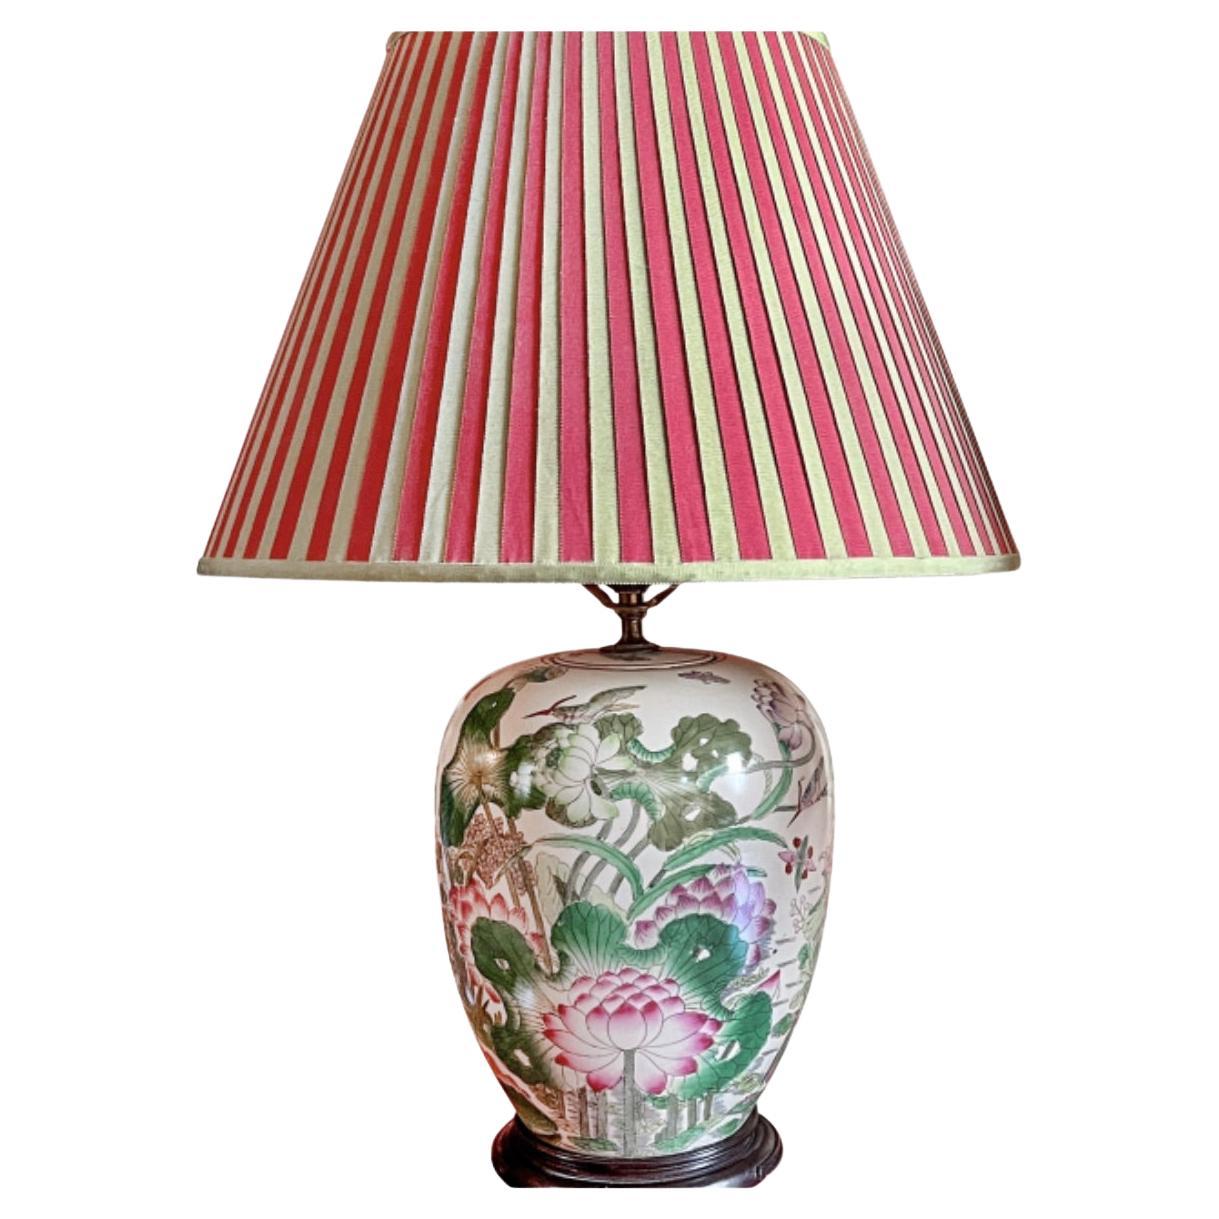 Chinese Export Lotus Painted Jar Table Lamp